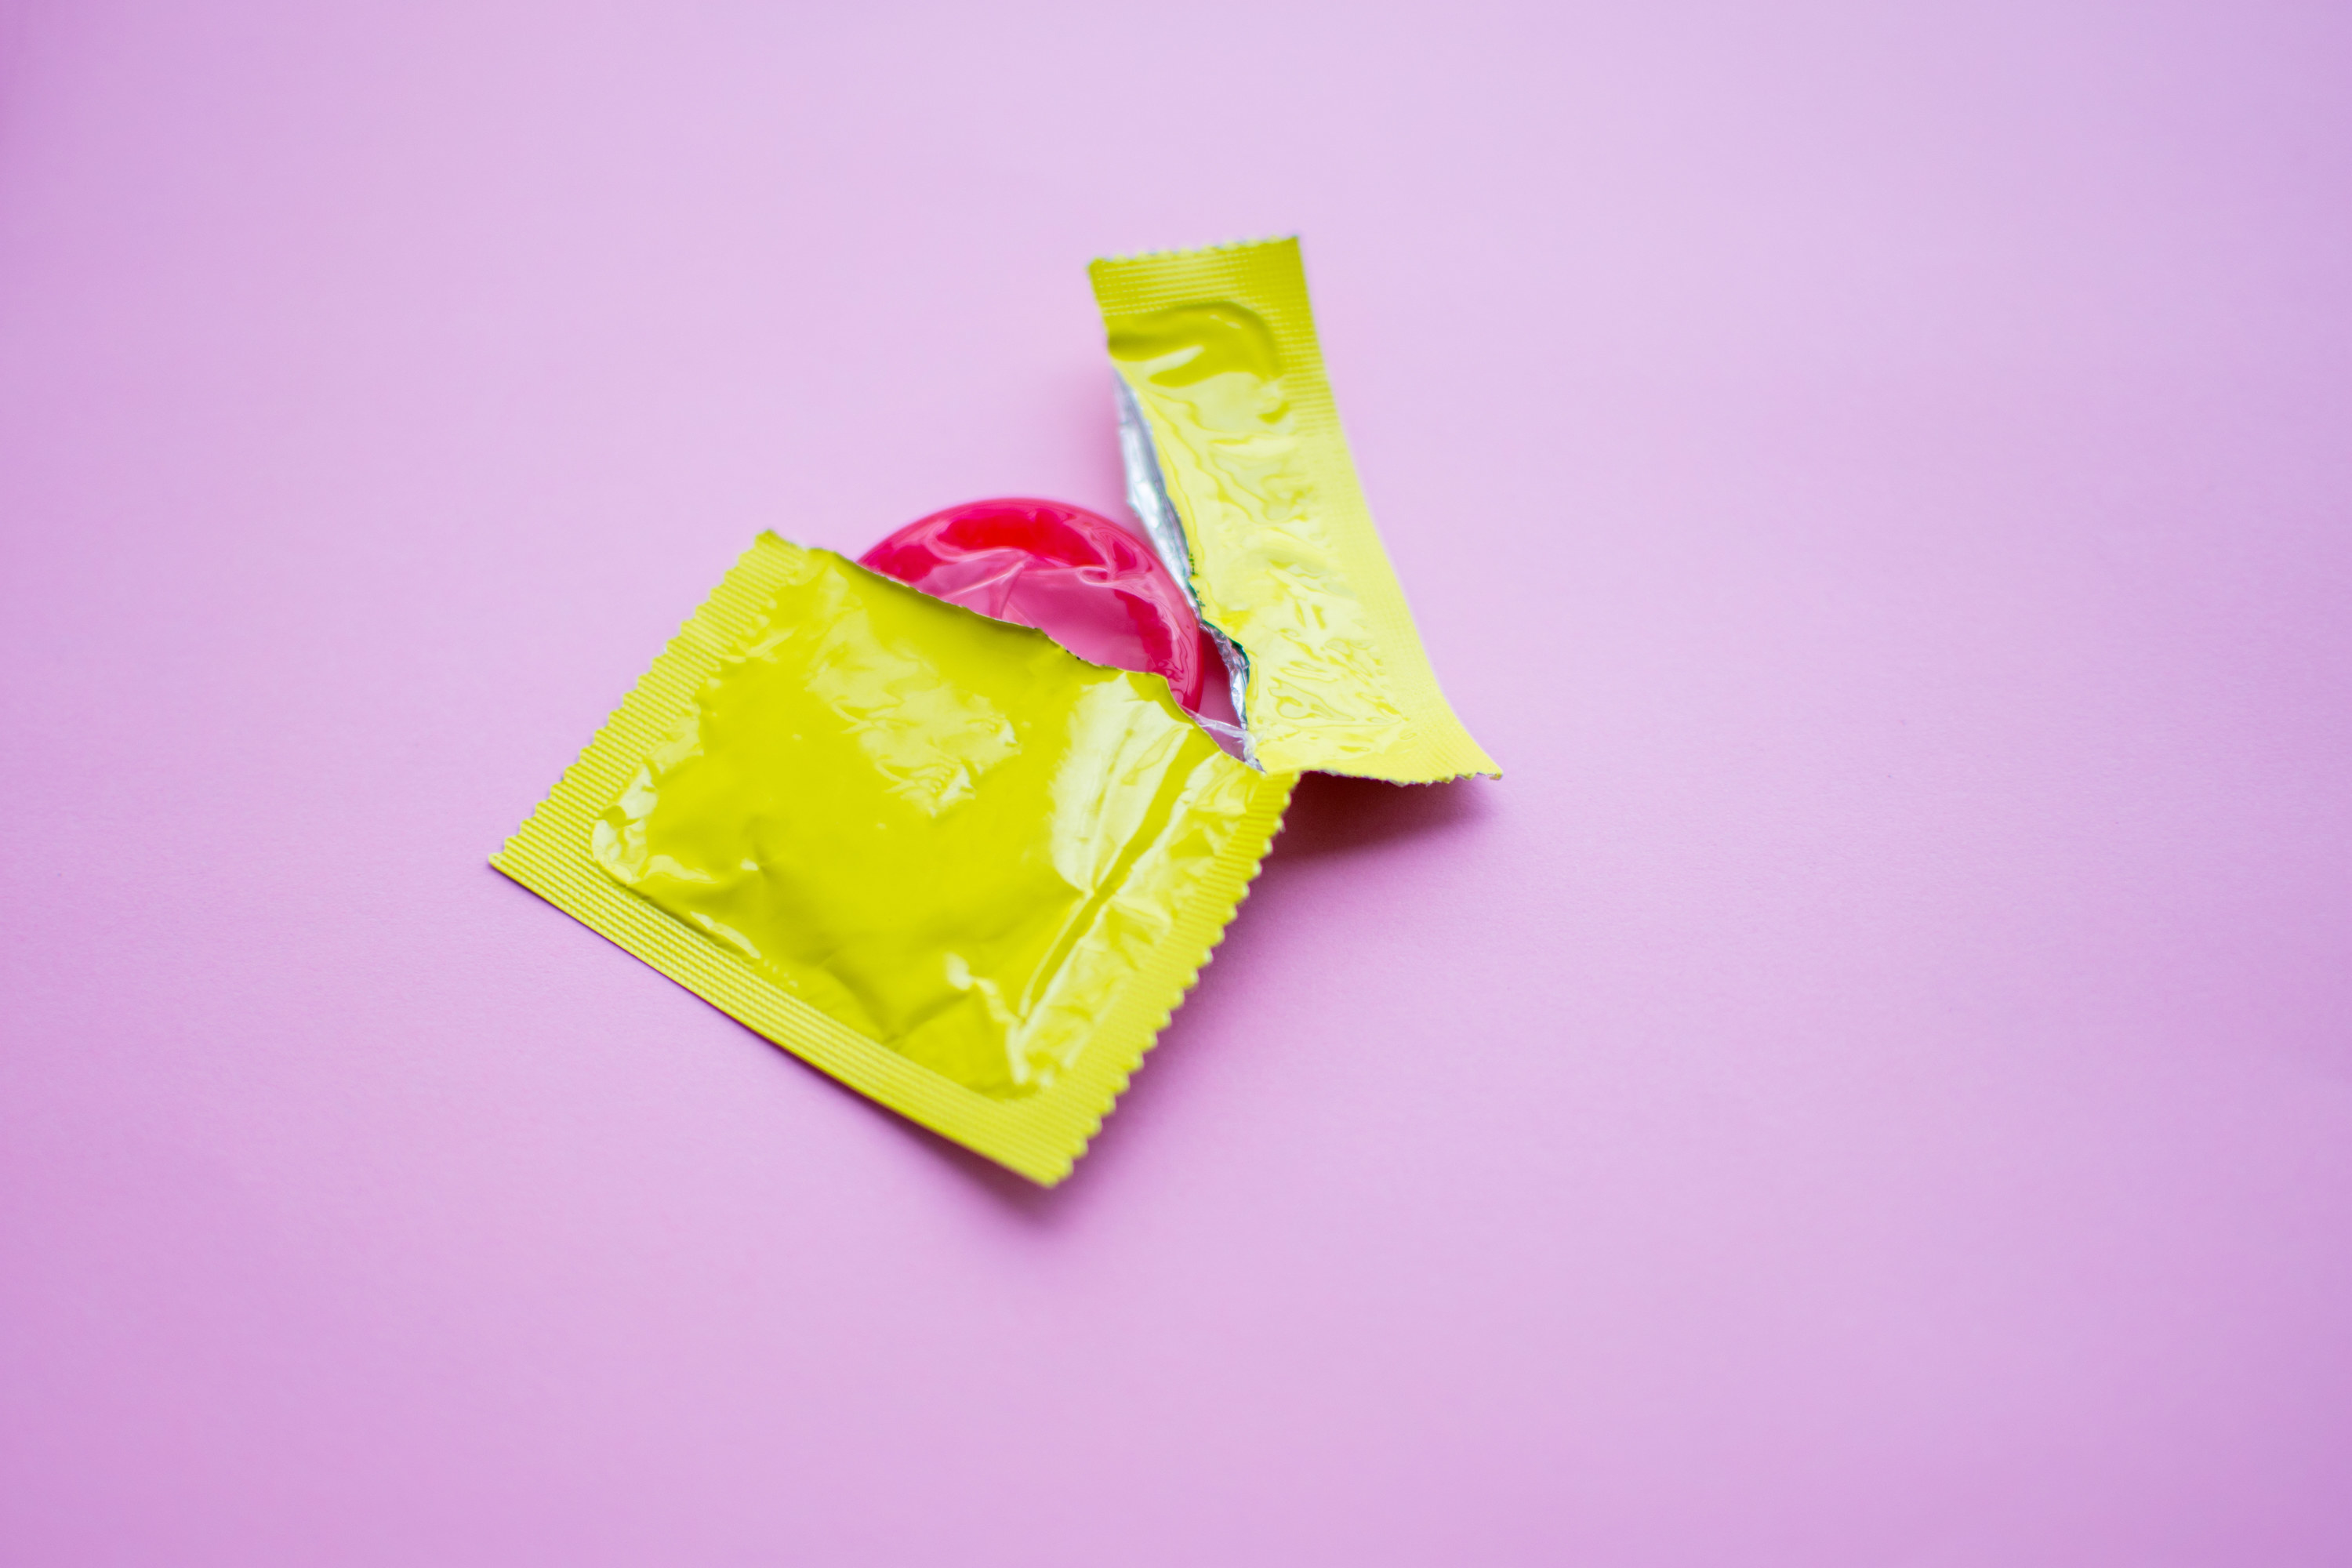 A condom in a half-ripped wrapper